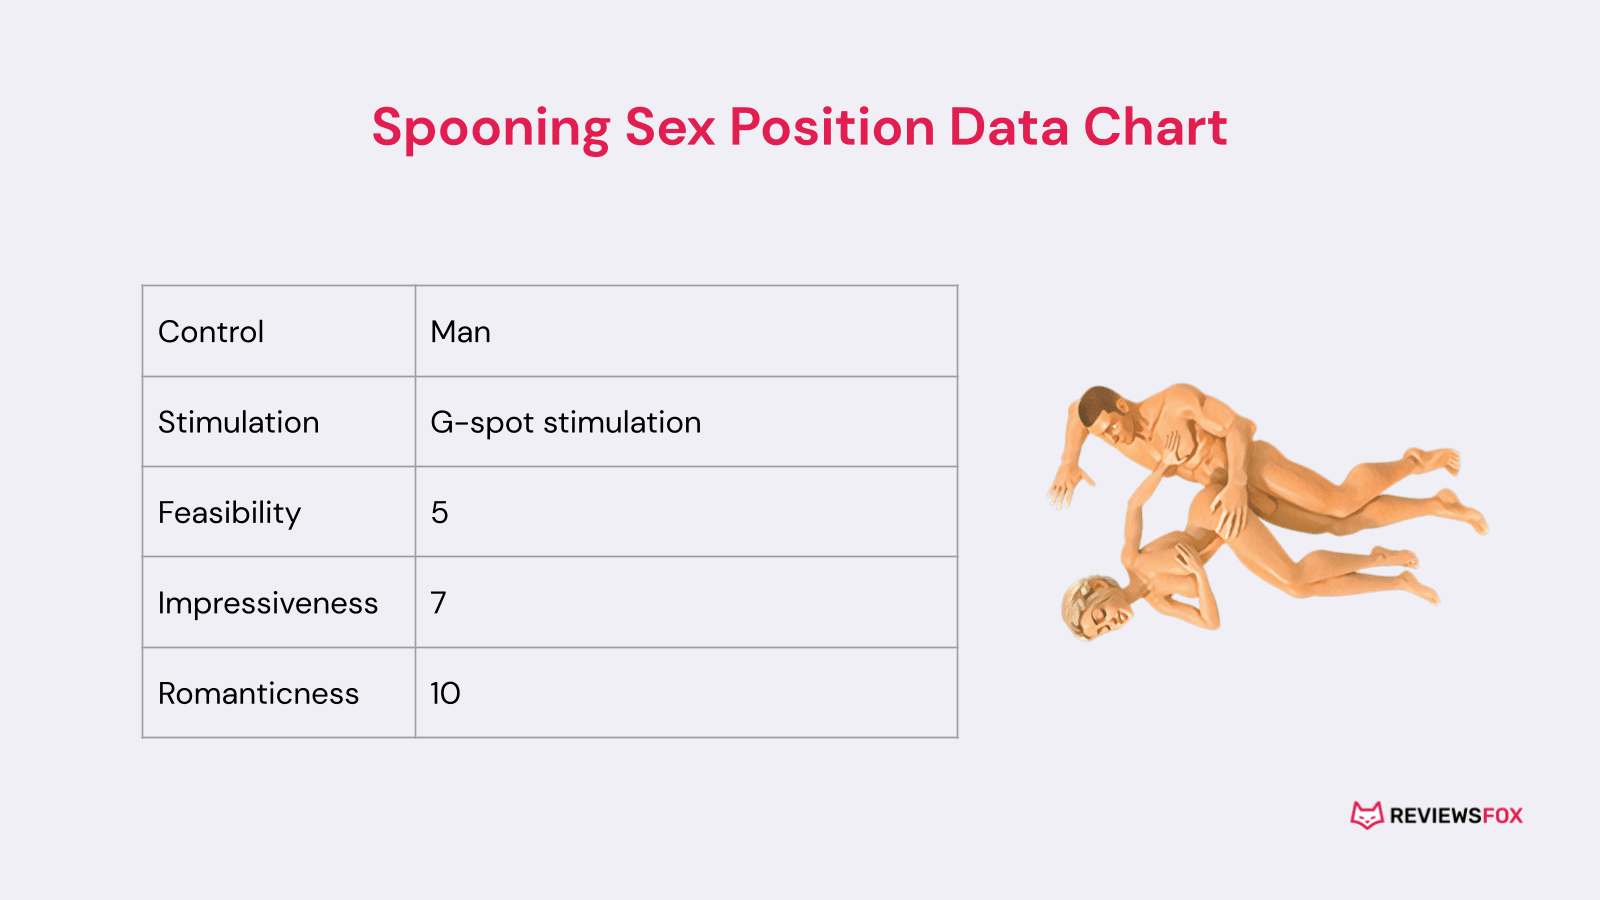 Spooning sex position data chart